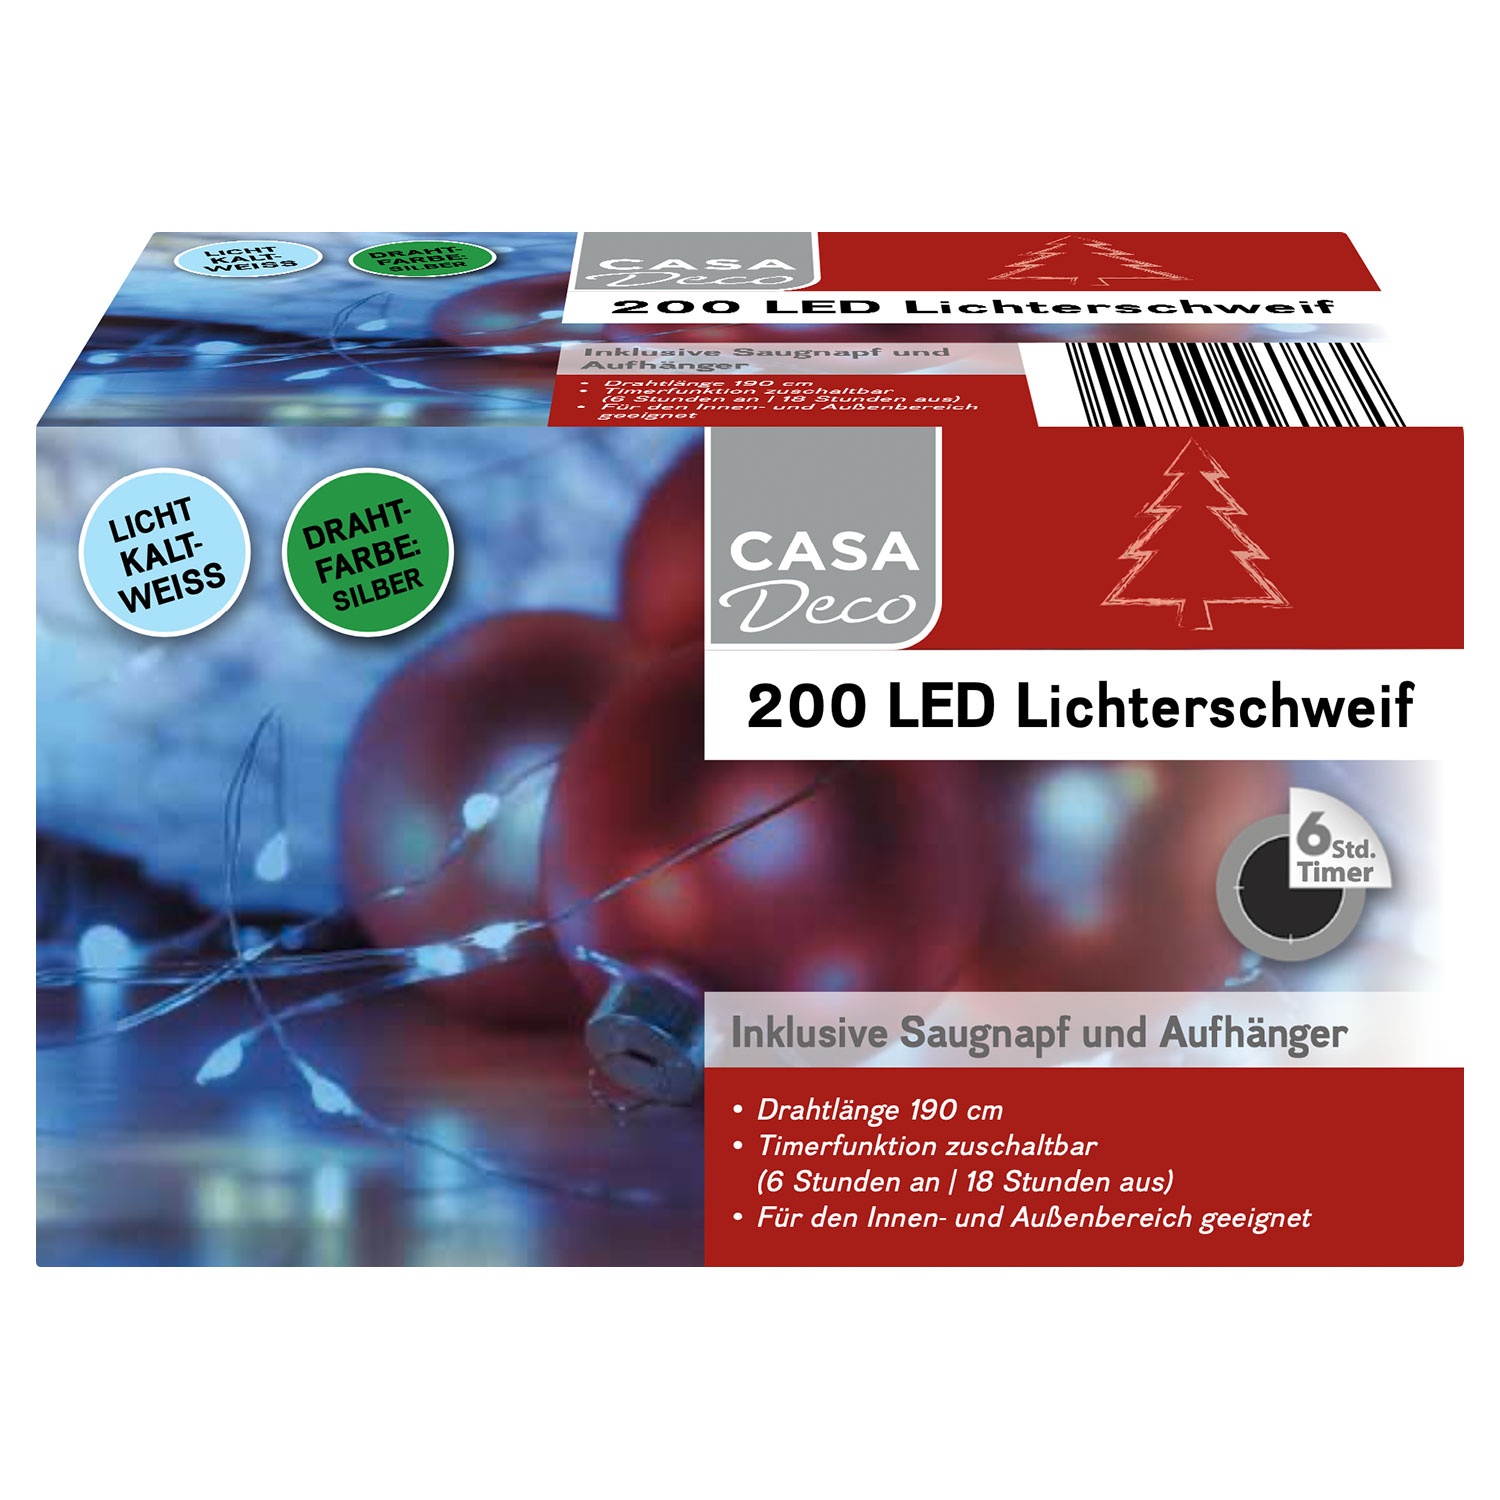 CASA DECO 200-LED-Lichterschweif